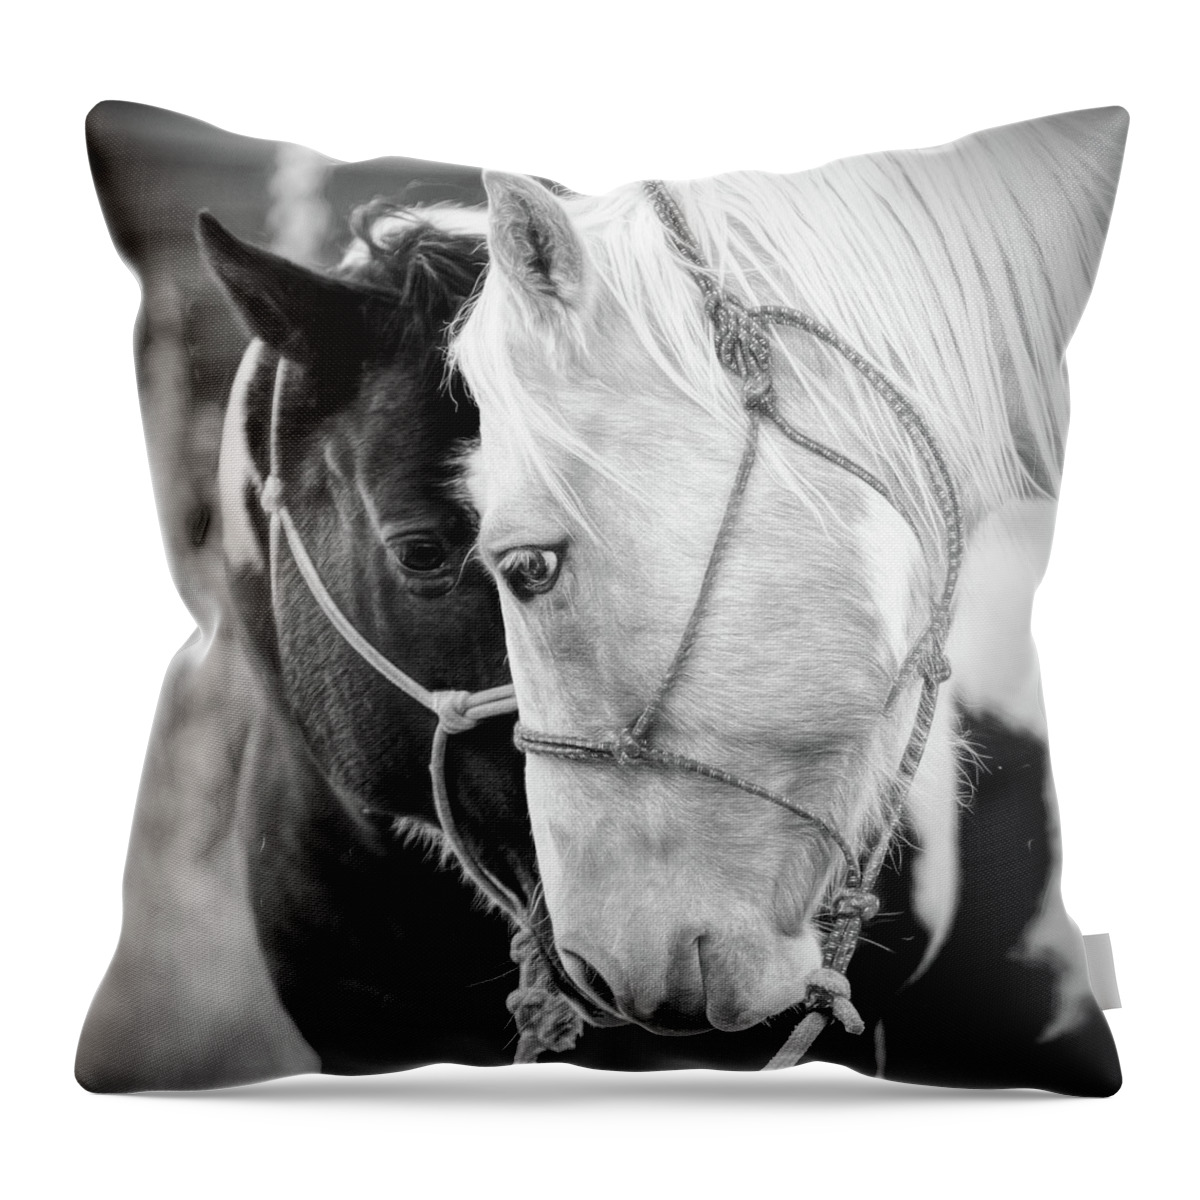 Horse Throw Pillow featuring the photograph True Friends by Sharon Jones